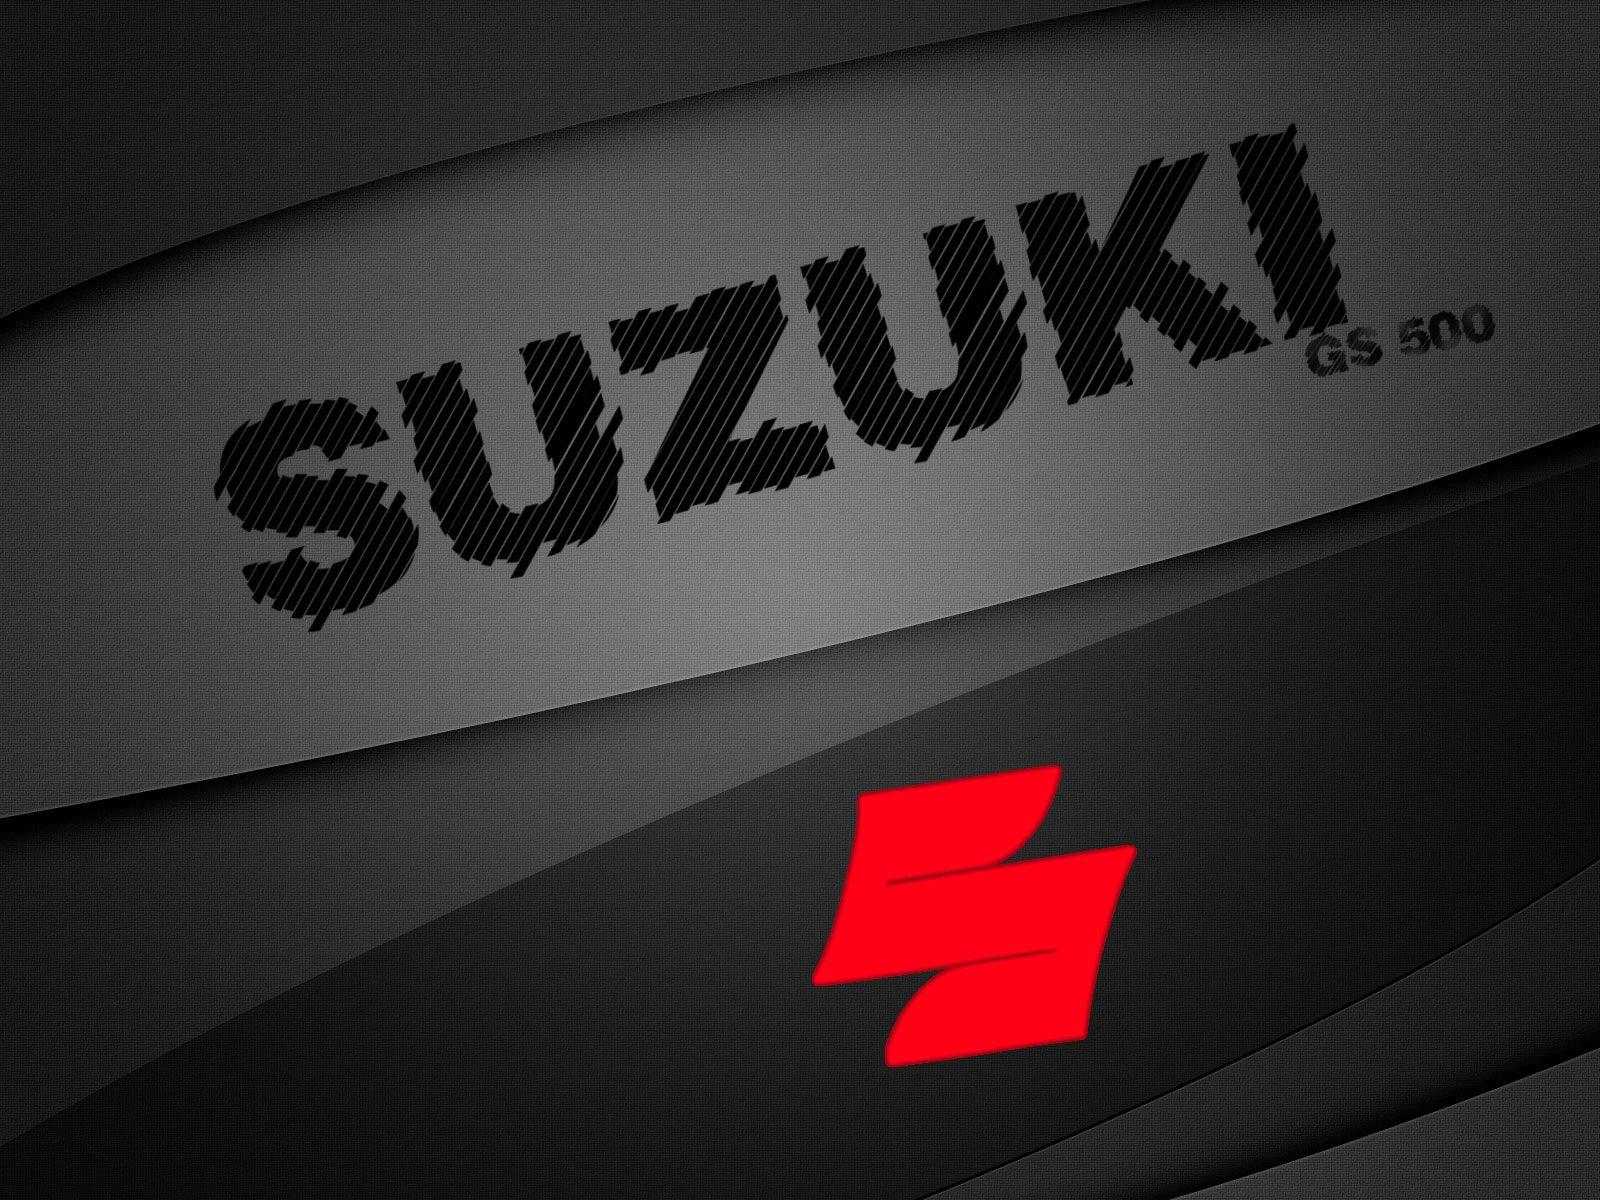 Suzuki Wallpapers